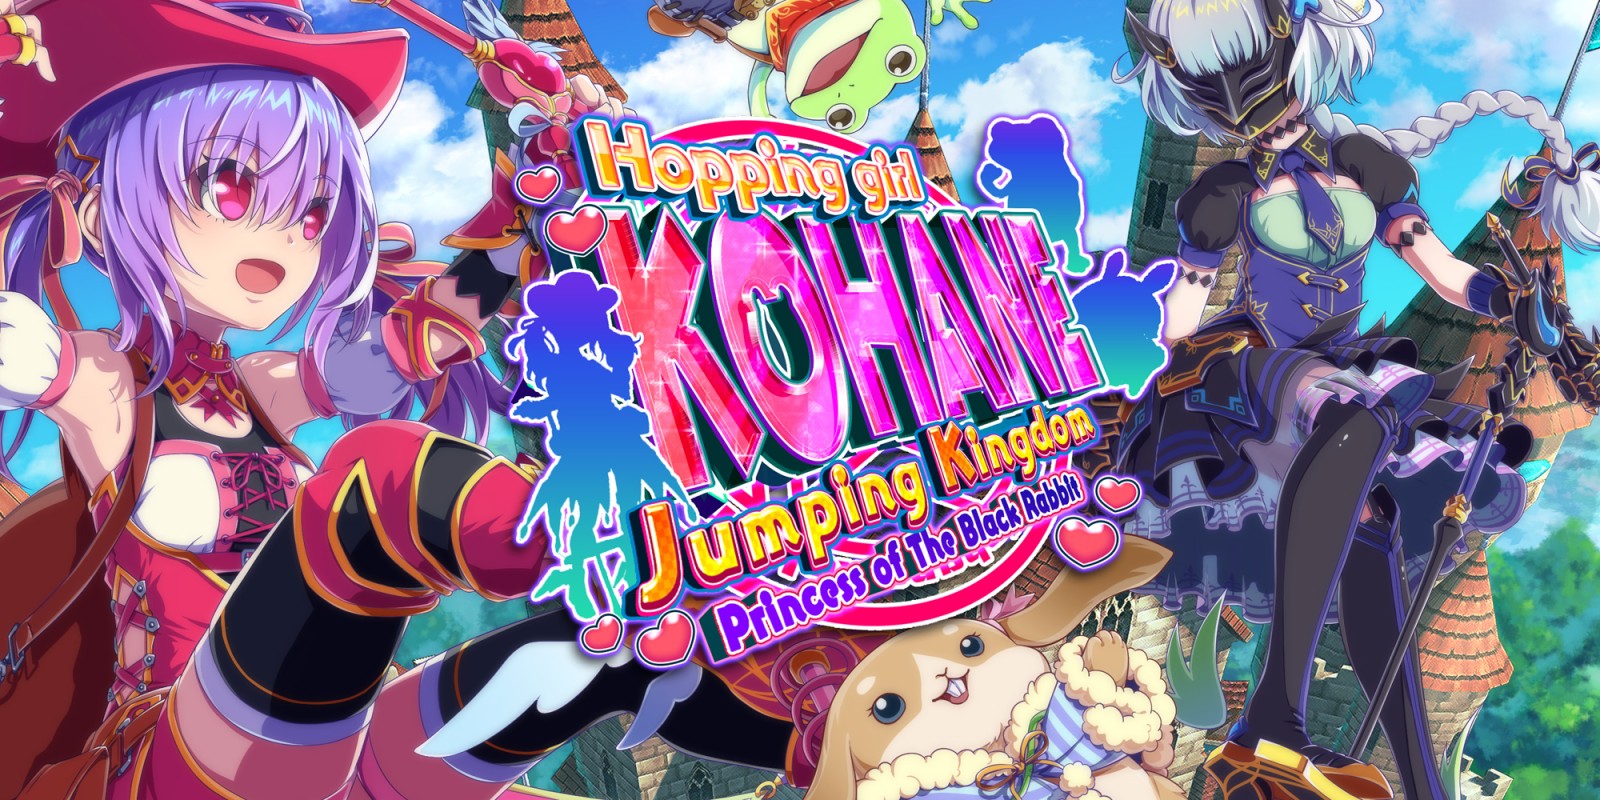 Hopping Girl Kohane Jumping Kingdom Princess Of The Black Rabbit Nintendo Switch Download Software Games Nintendo